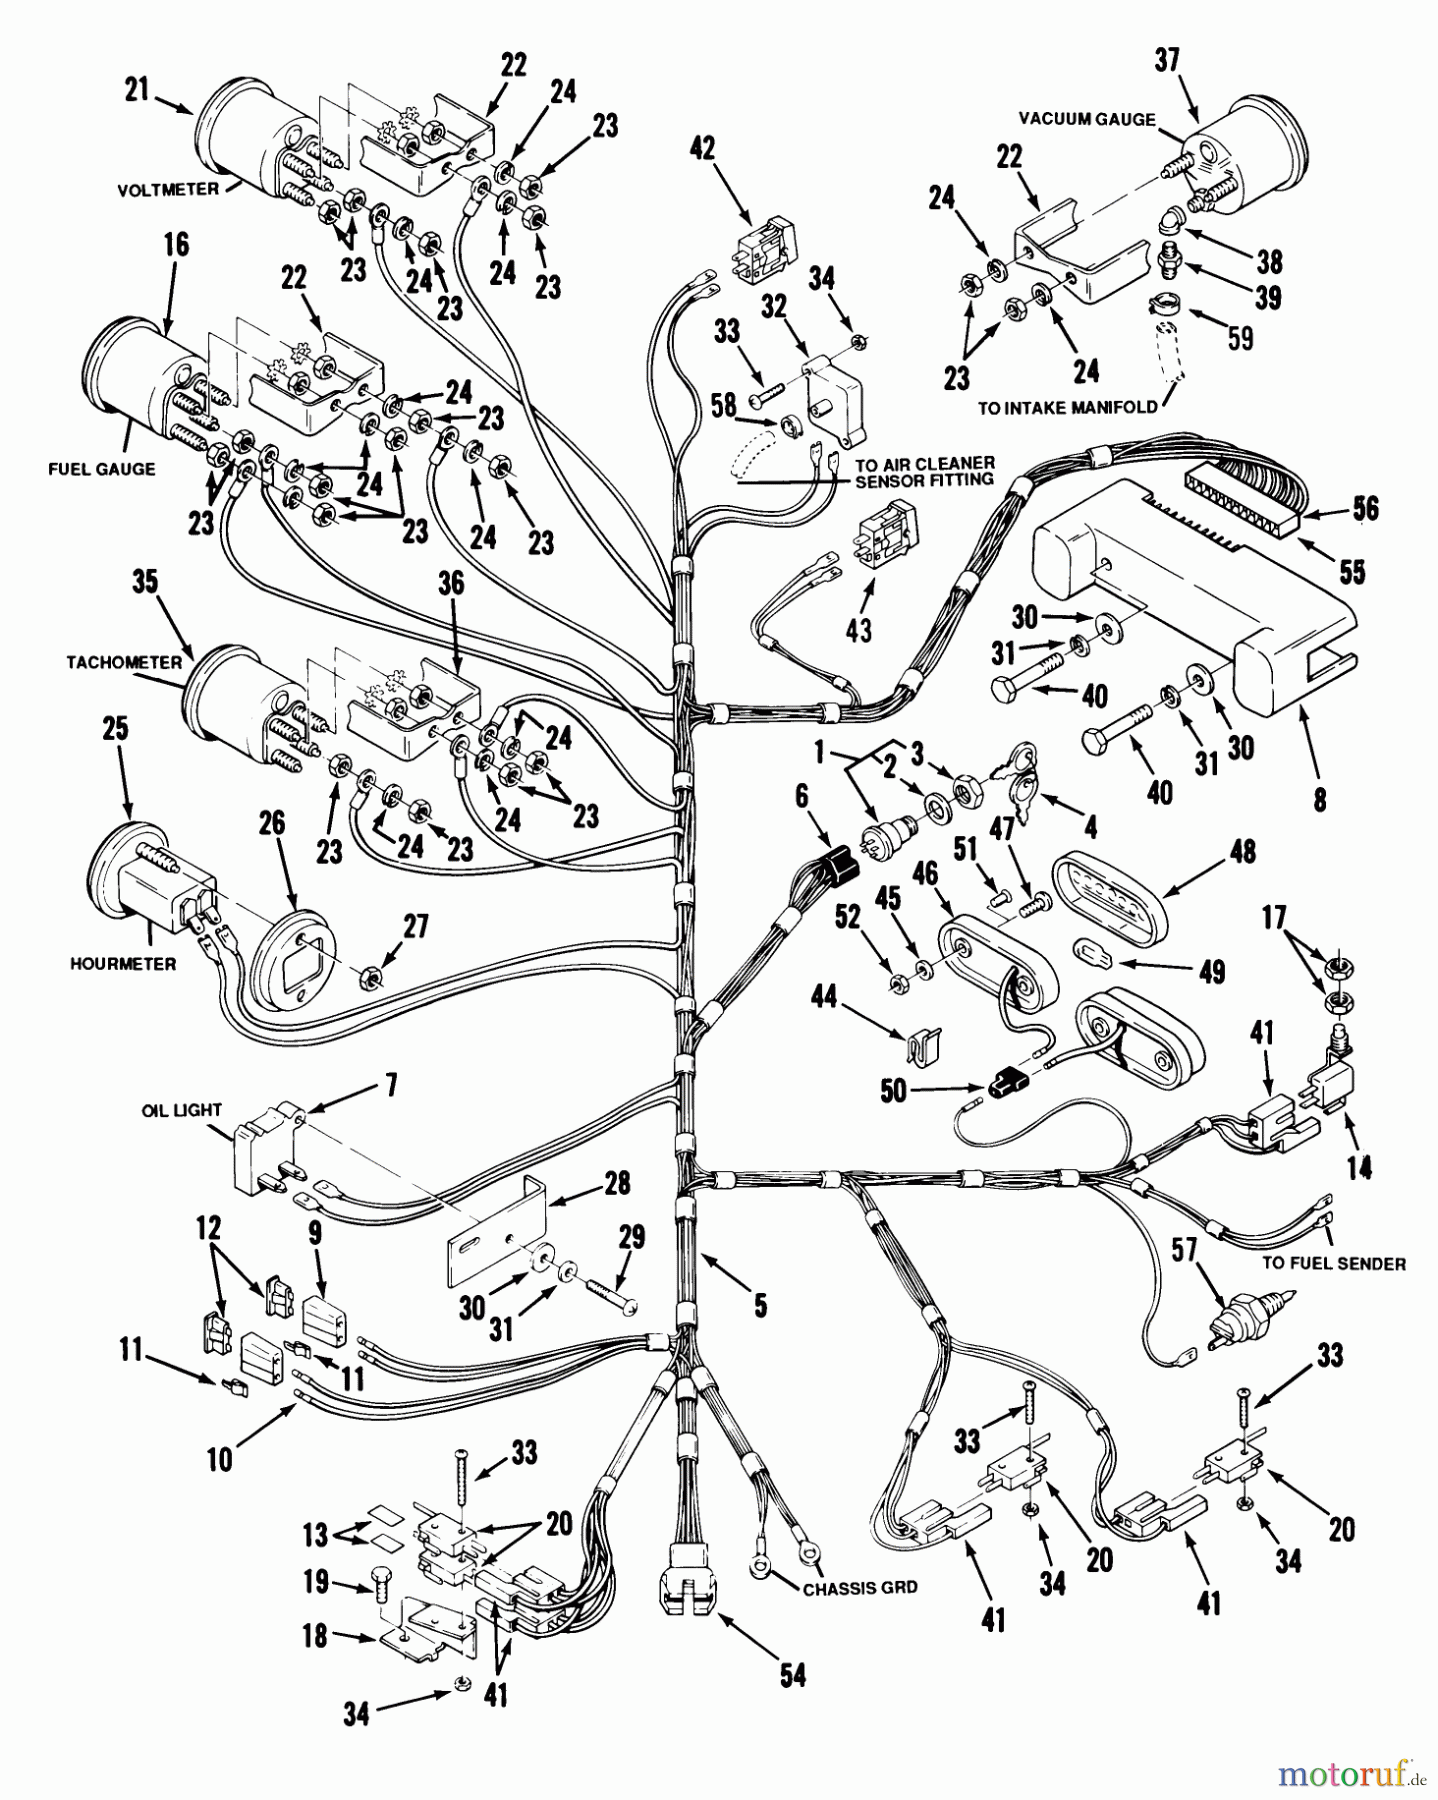  Toro Neu Mowers, Lawn & Garden Tractor Seite 1 31-16OE01 (516-H) - Toro 516-H Garden Tractor, 1988 ELECTRICAL SYSTEM #1